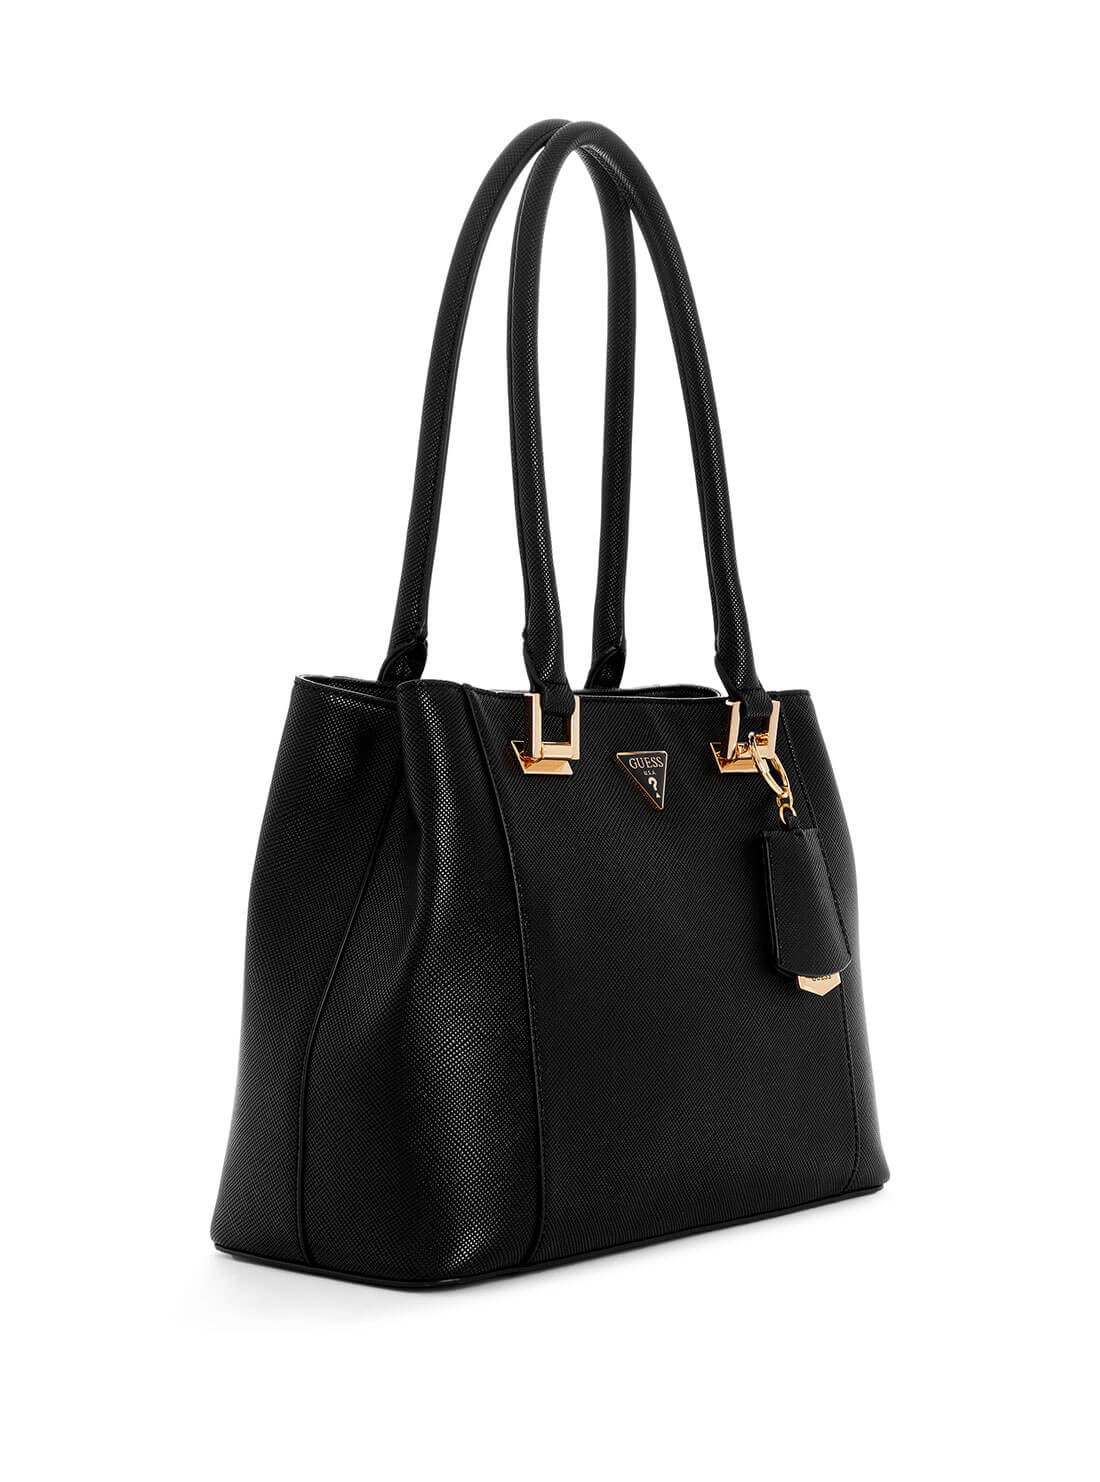 Women's Black Breana Shopper Tote Bag side view